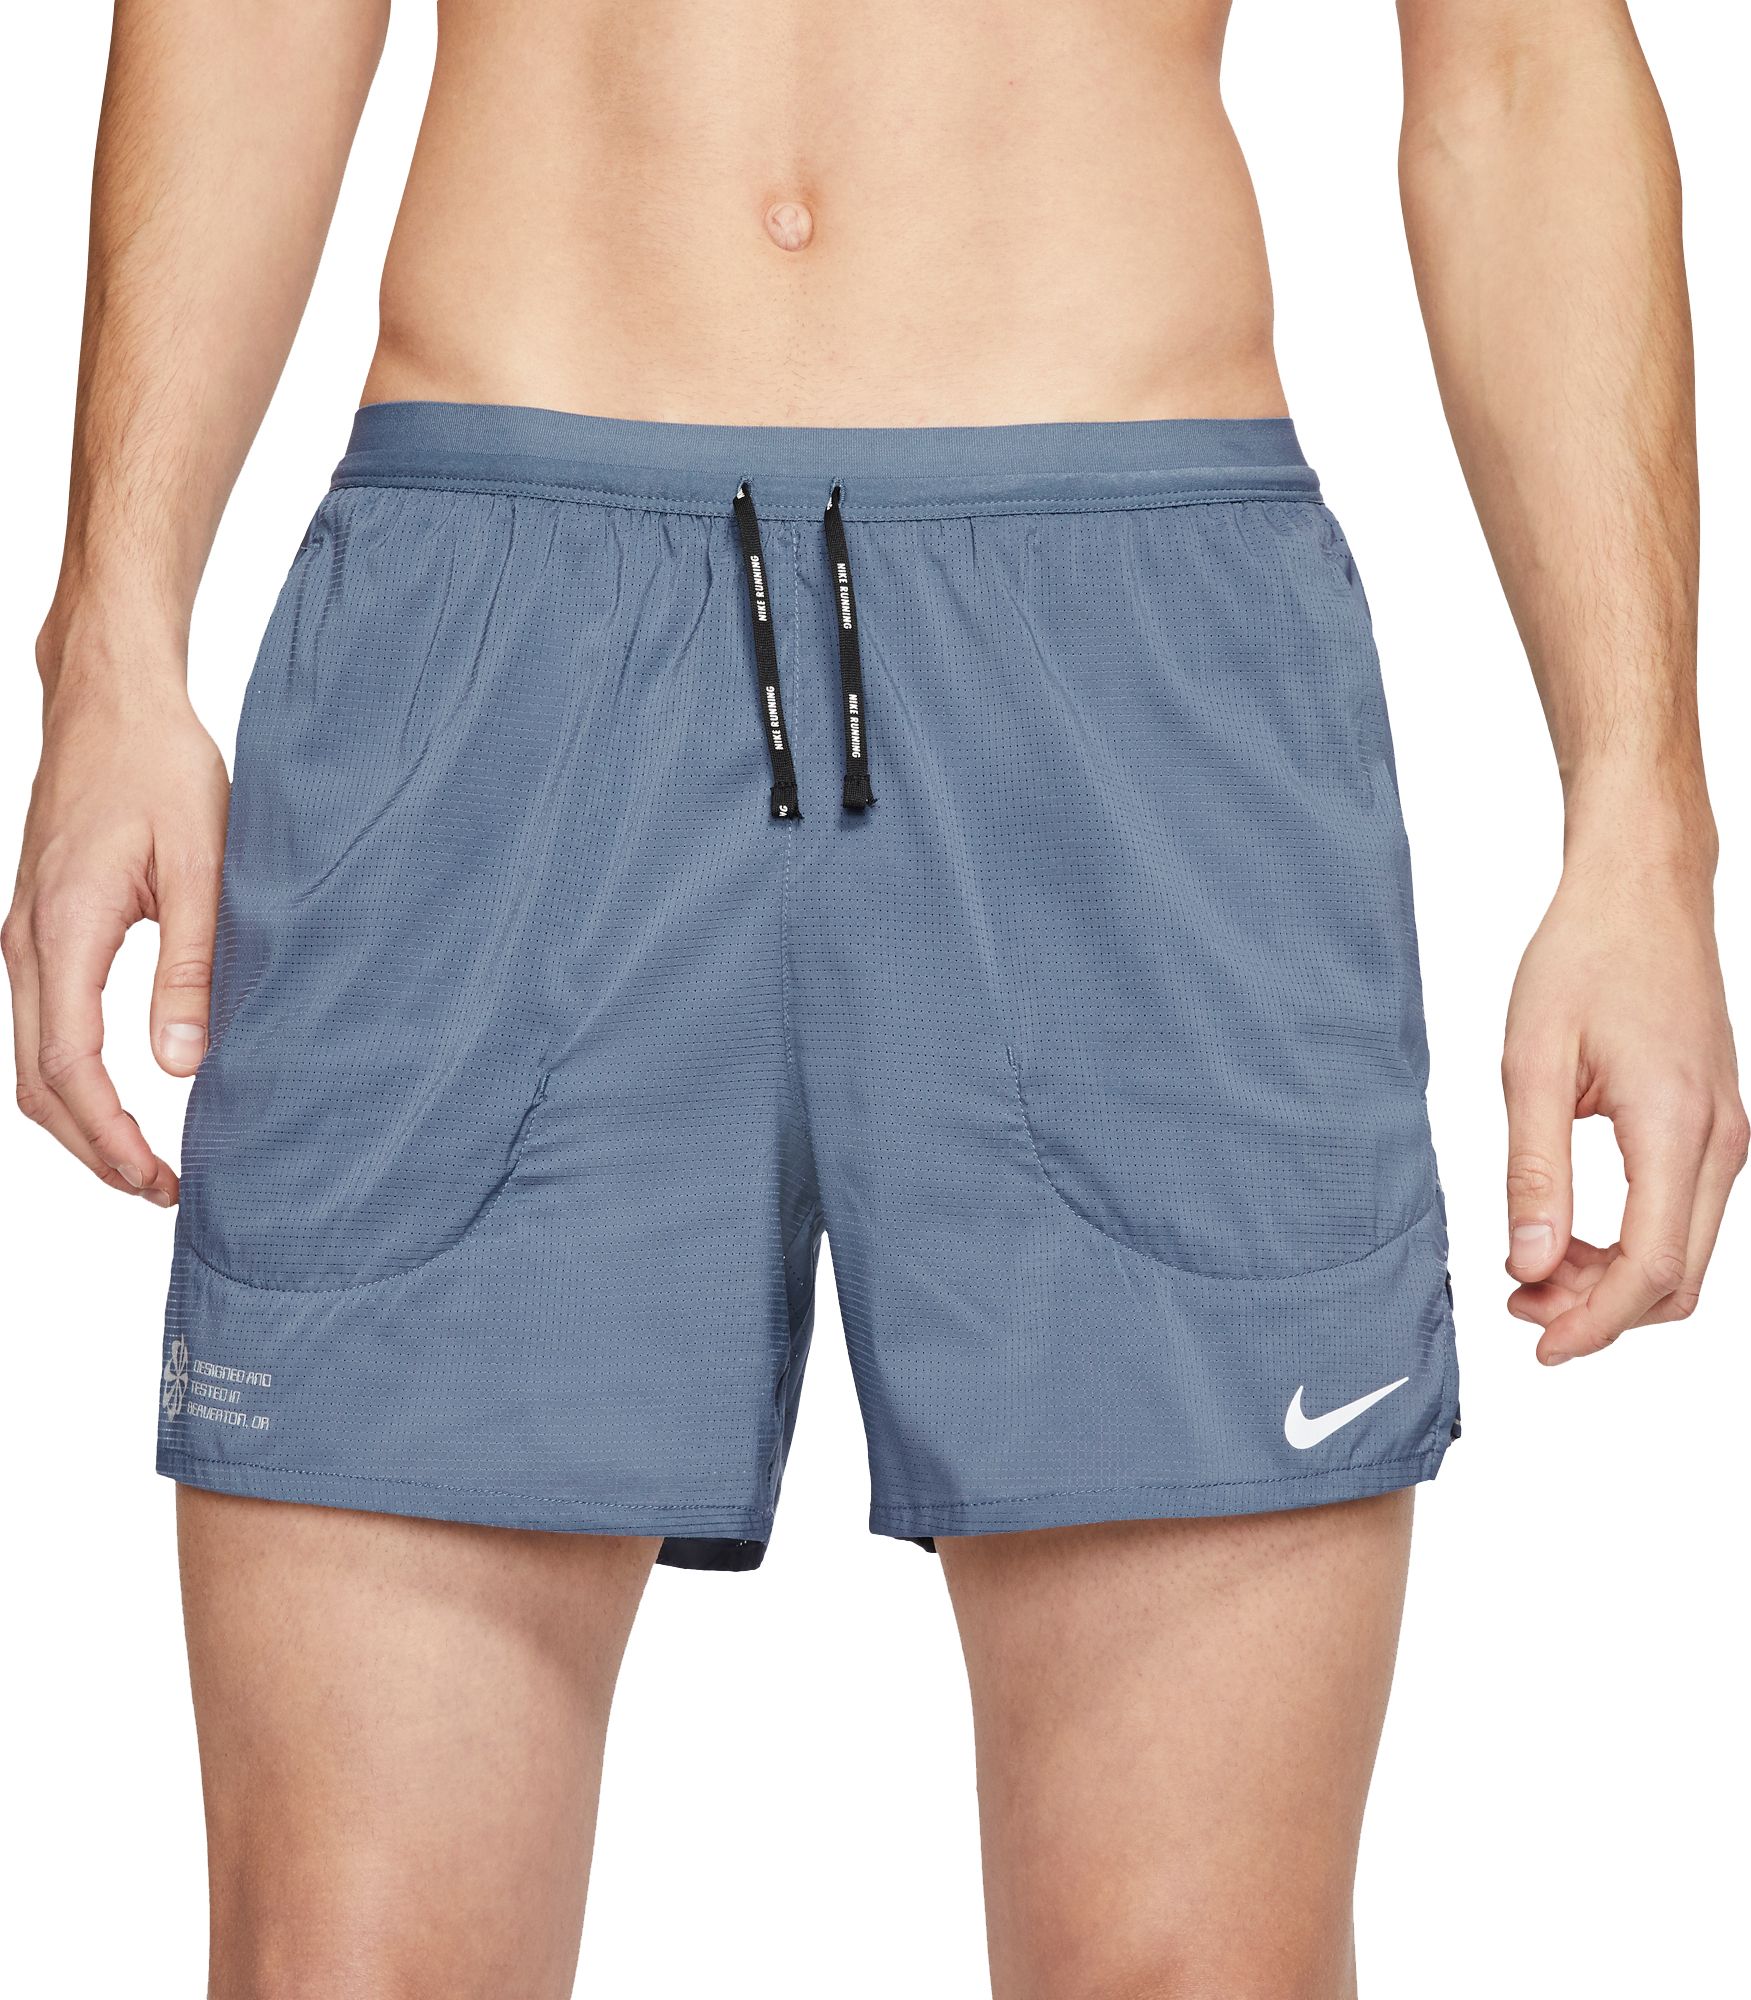 adidas men's running shorts 5 inch inseam